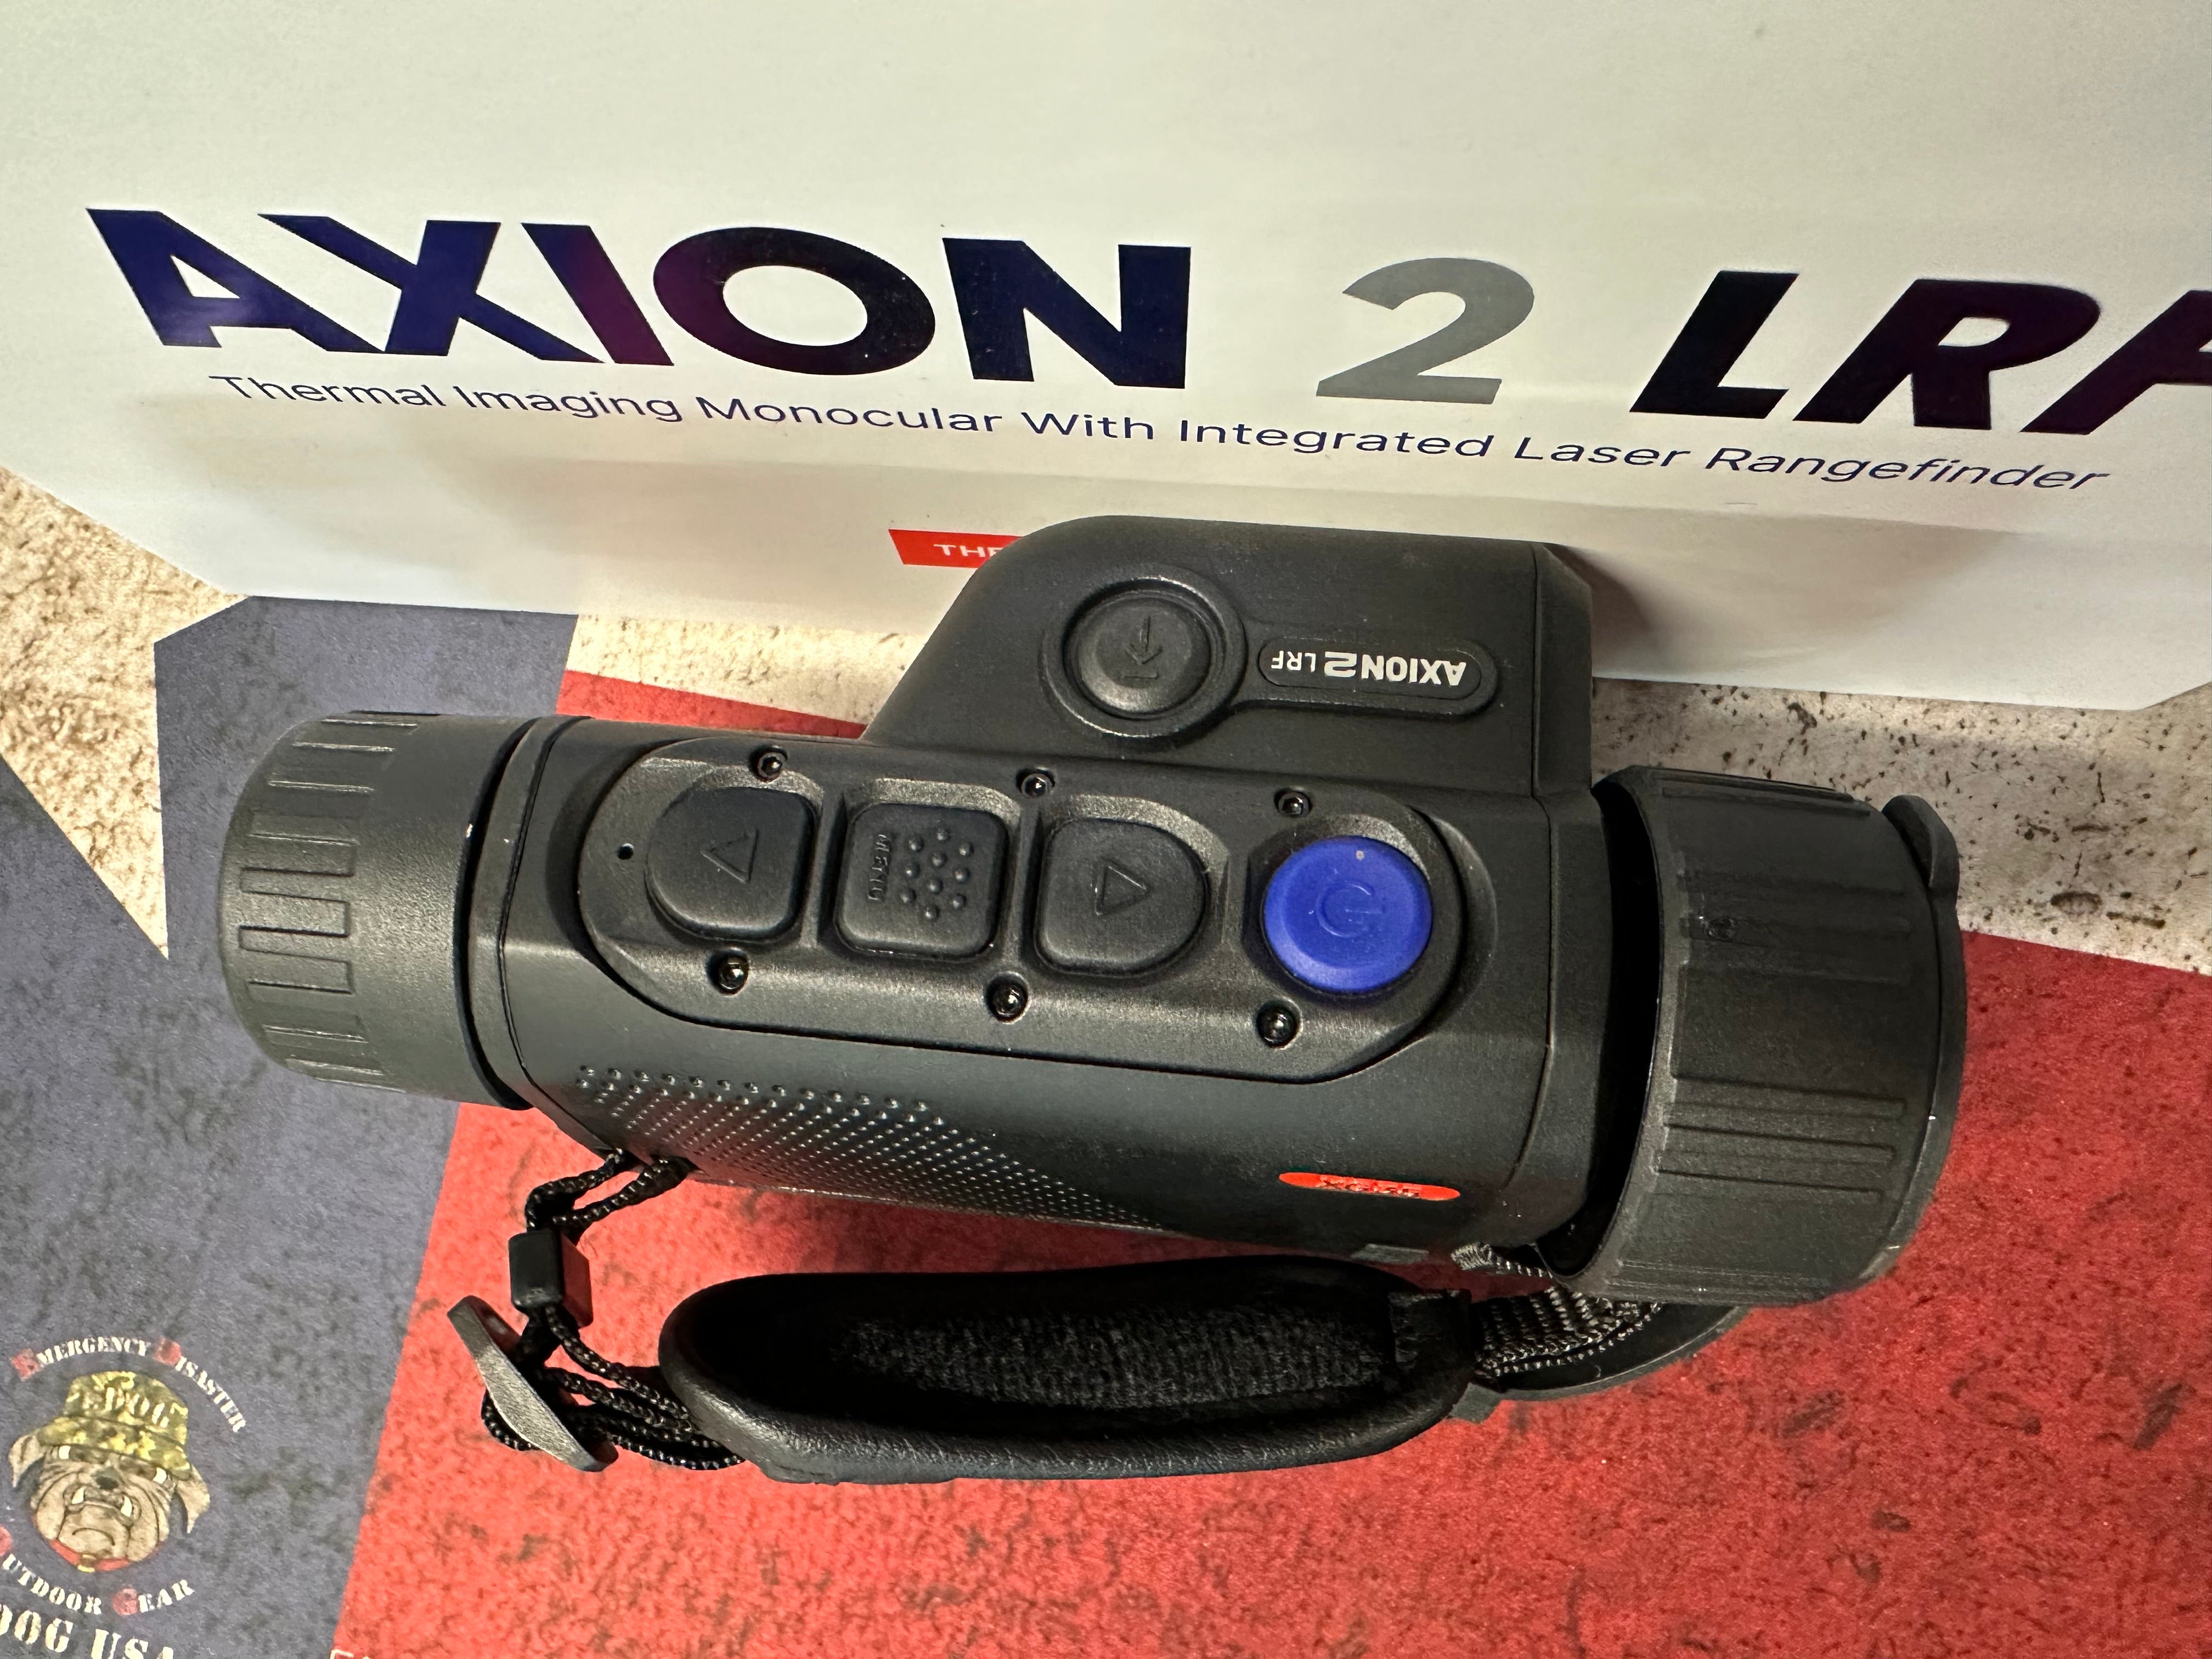 Pulsar Axion 2 LRF XG35 640 Thermal Monocular - Store Demo